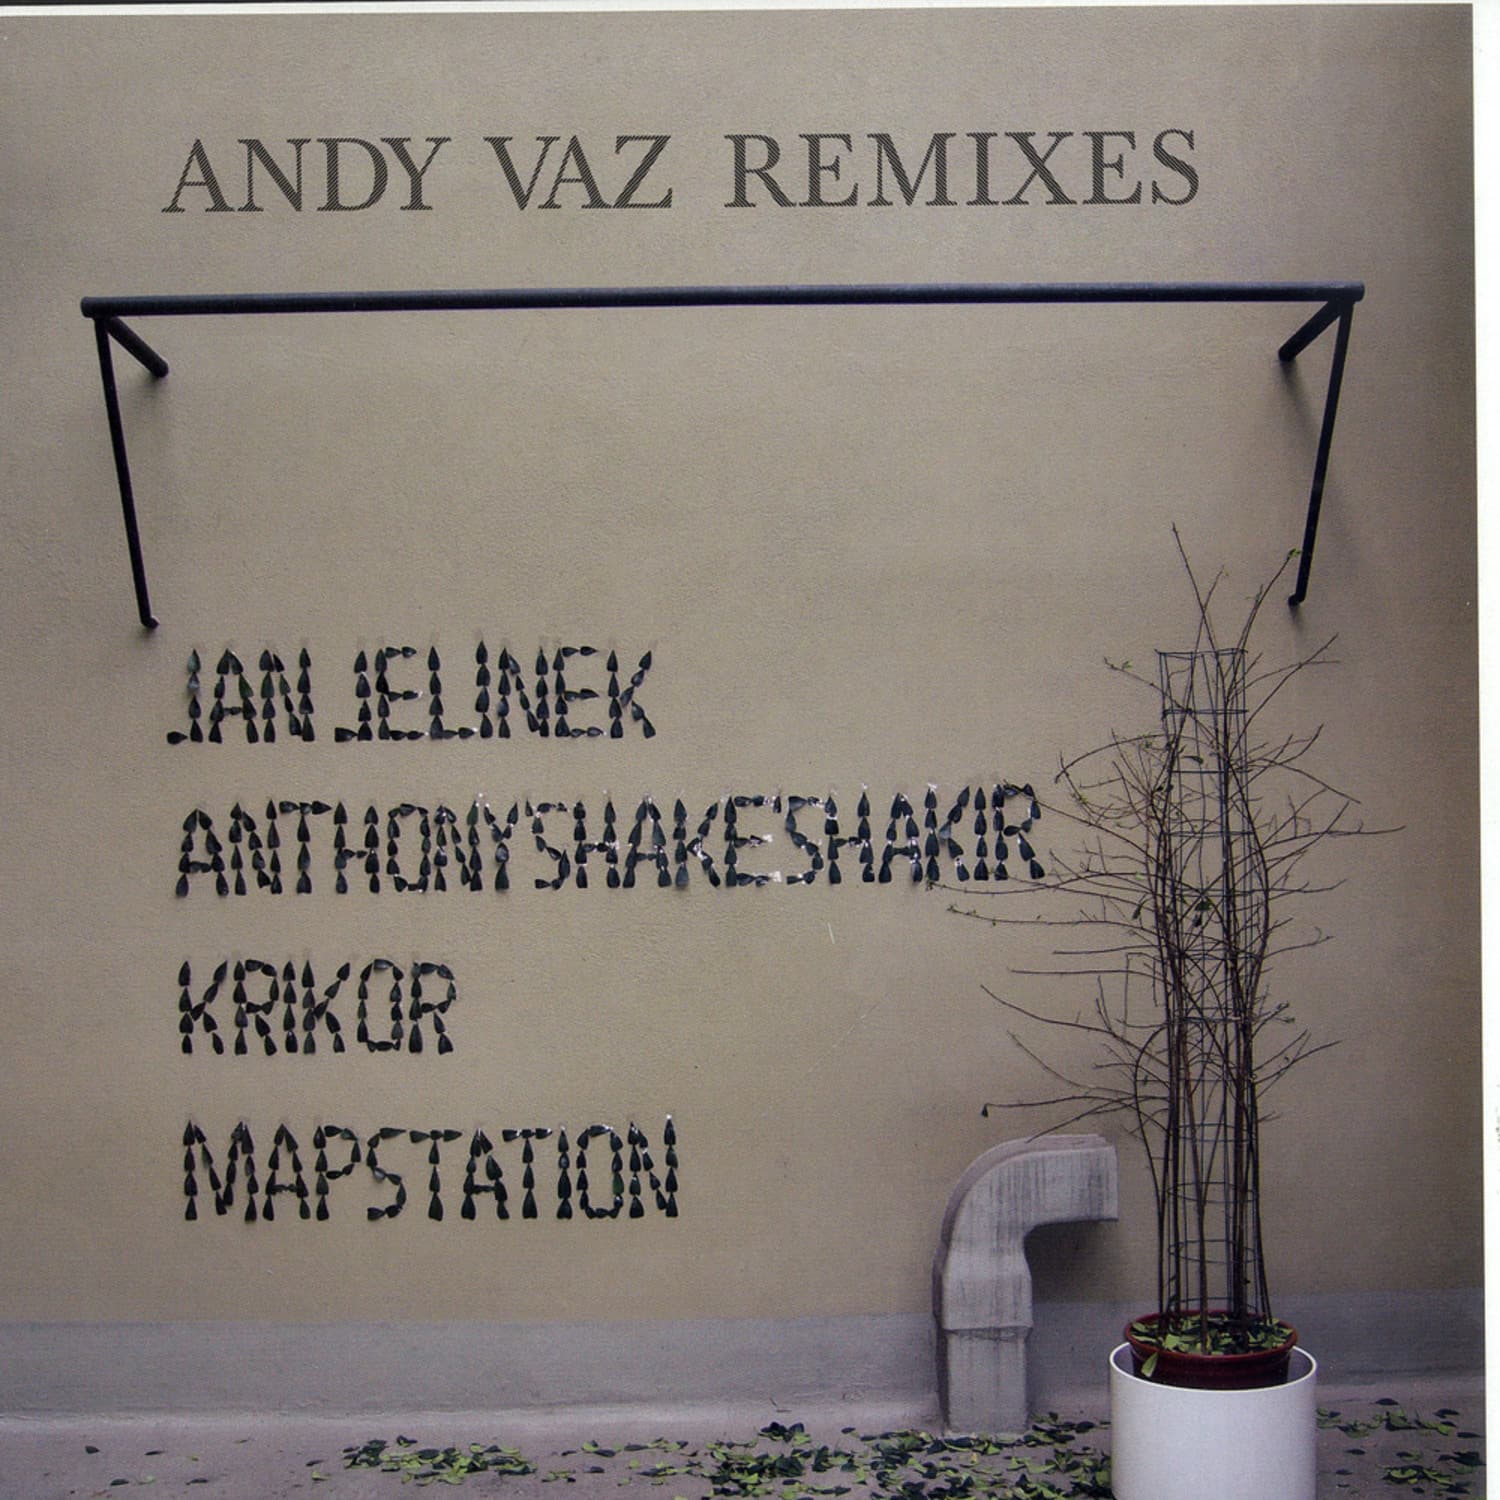 Andy Vaz - RMXS BY J. JELINEK, KRIKOR, A.SHAKIR